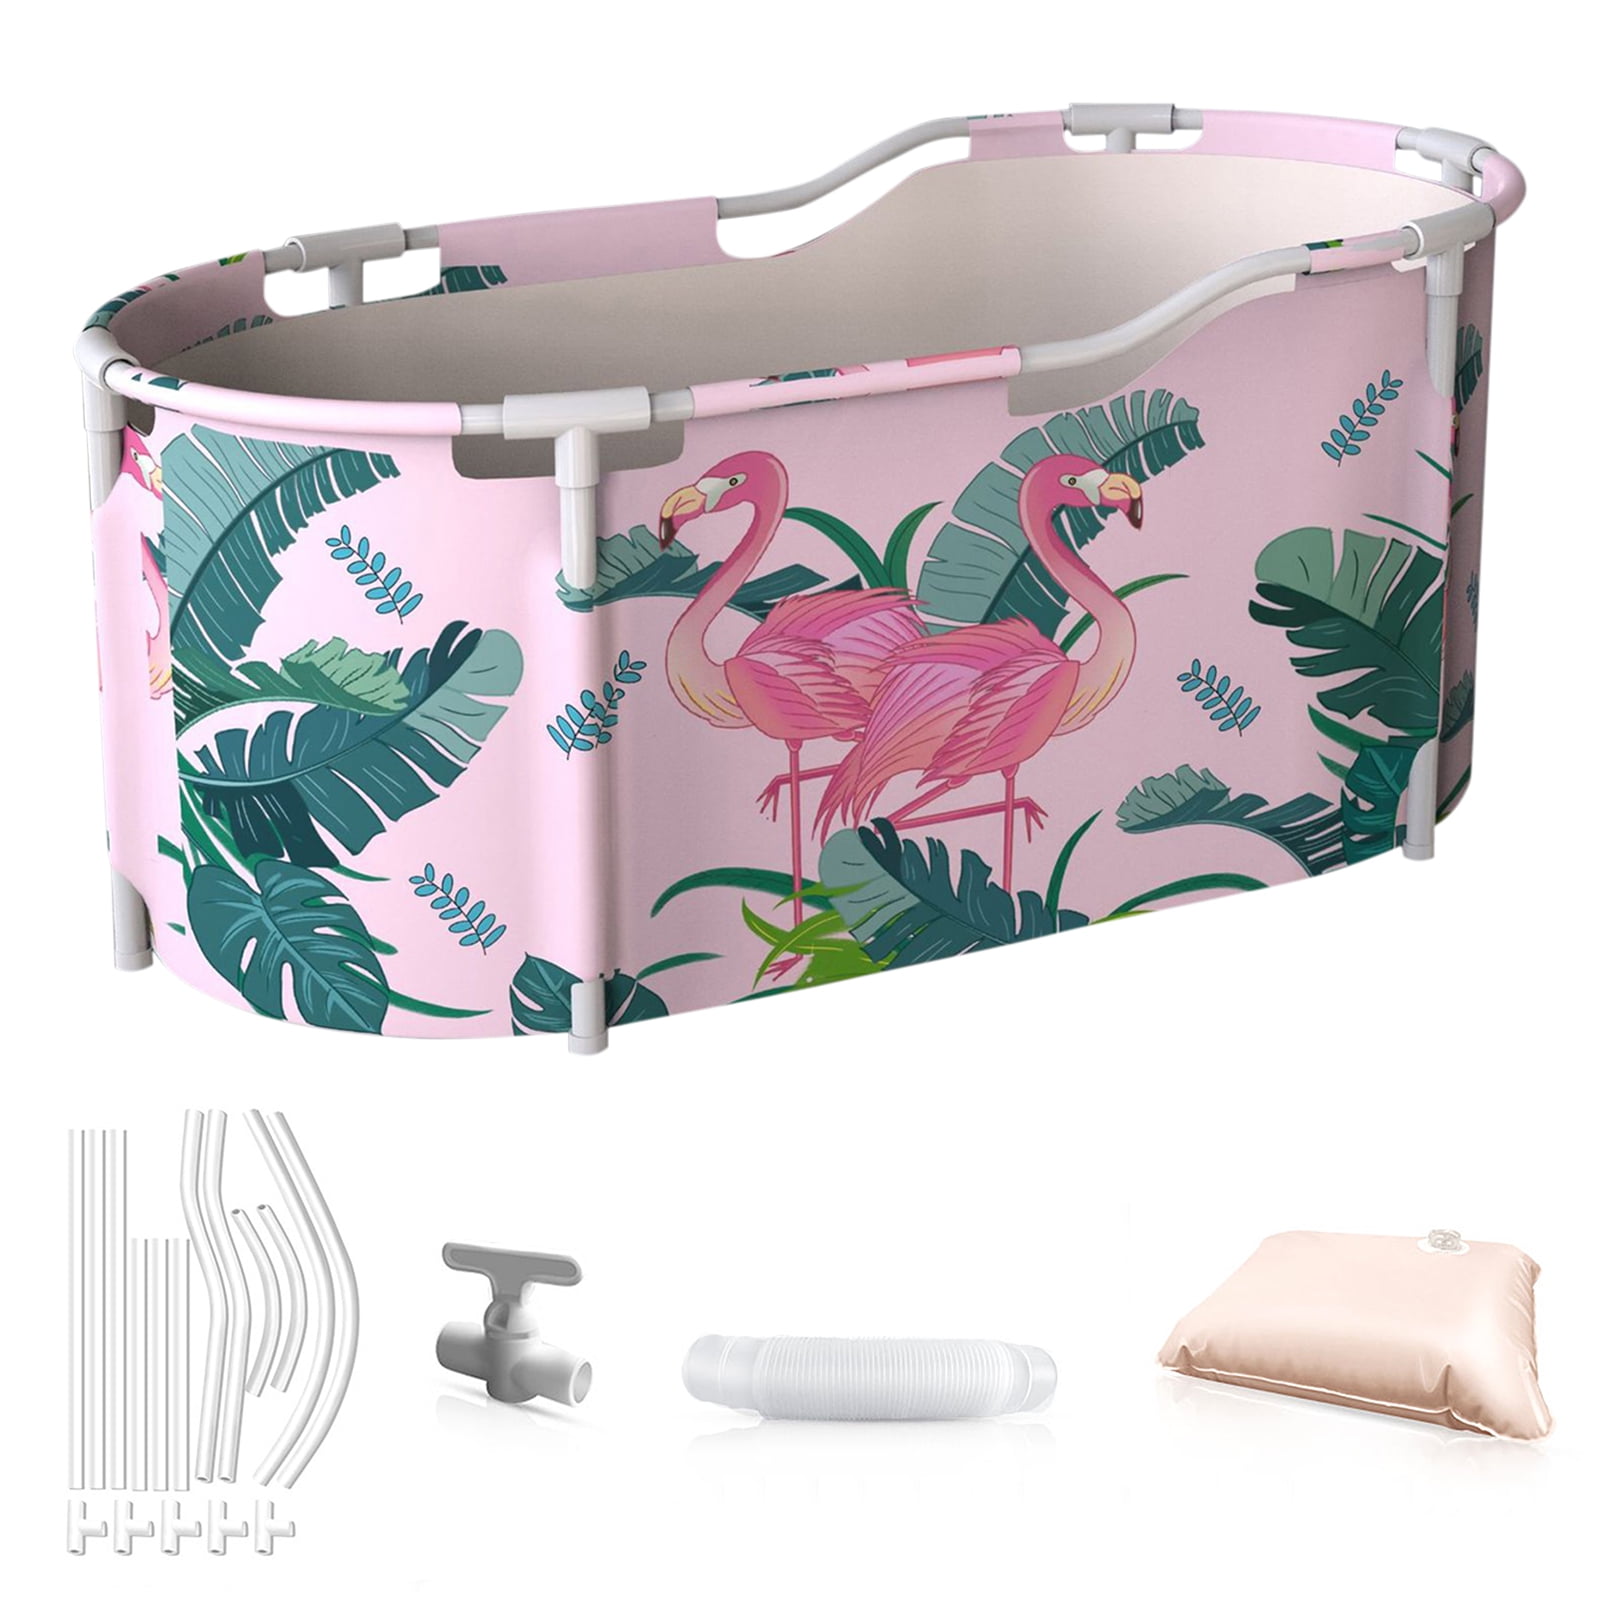 Foldable Bathtub Waterproof Portable Tub for Adult Children - Walmart